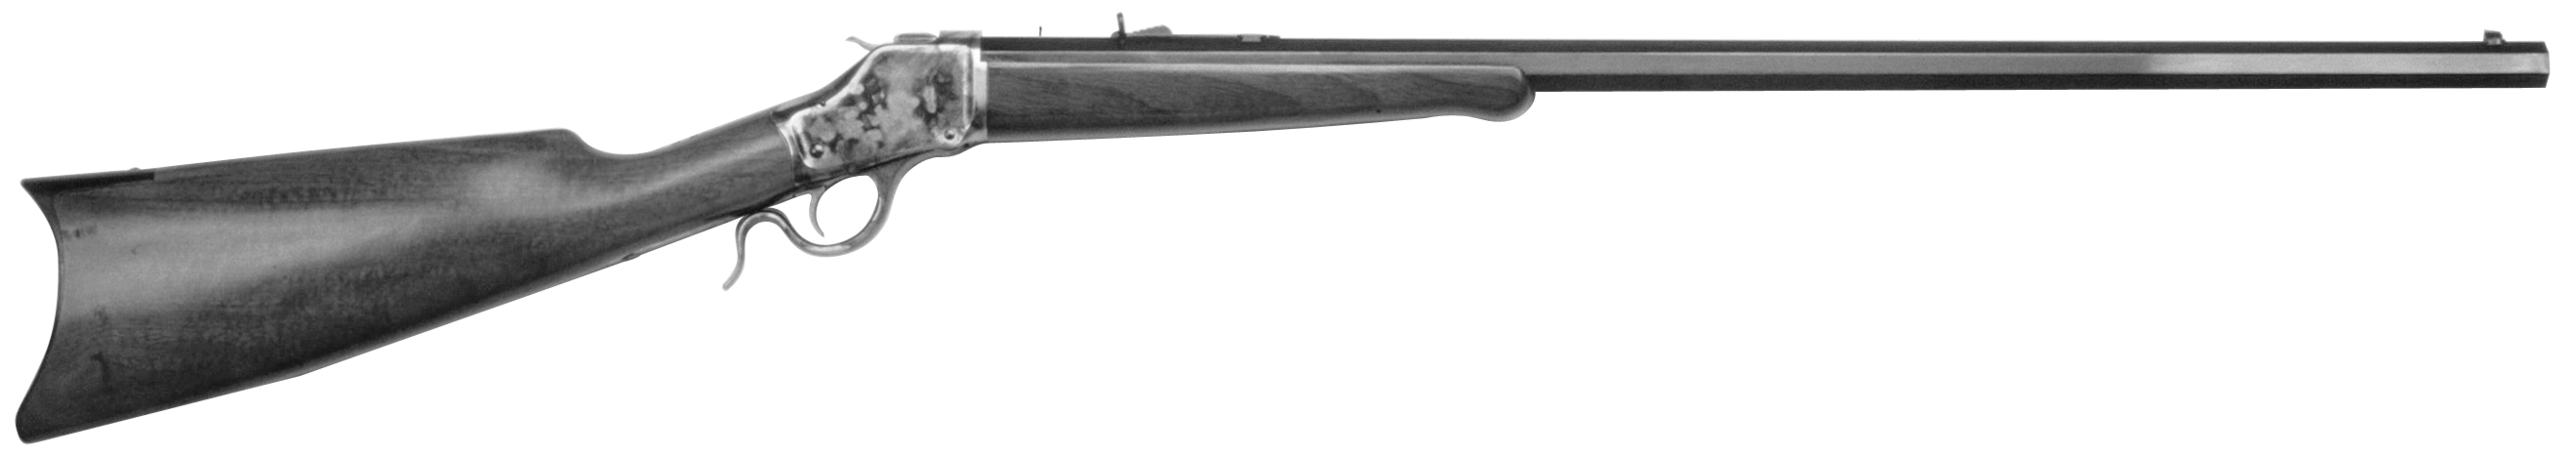 Model 1885 High Wall Single-Shot Rifle